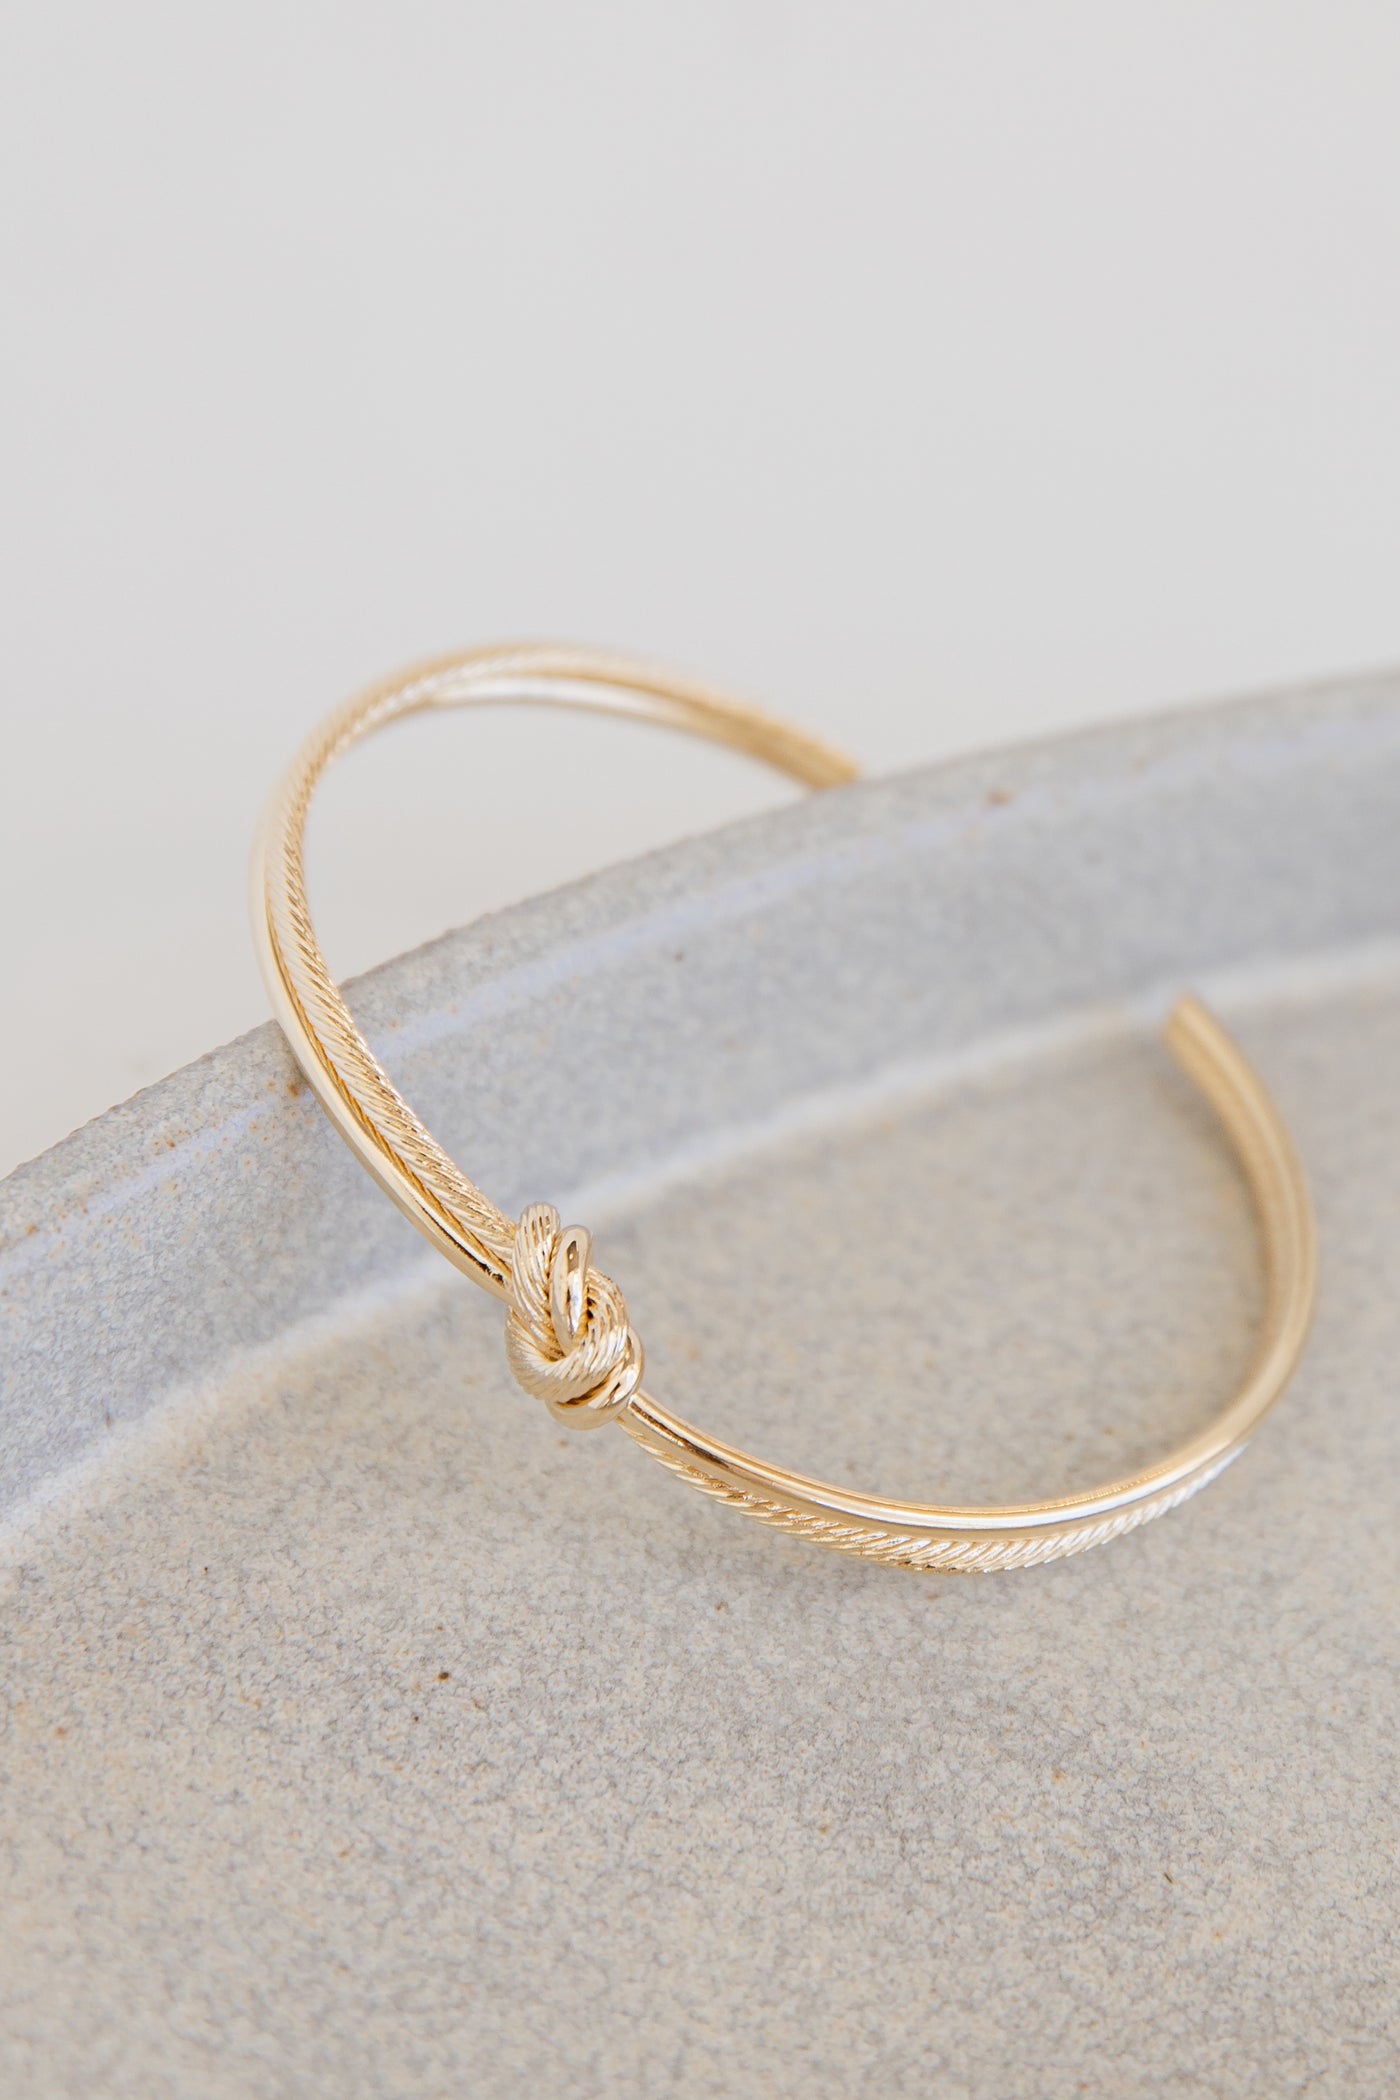 Gold Knot Cuff Bracelet flat lay